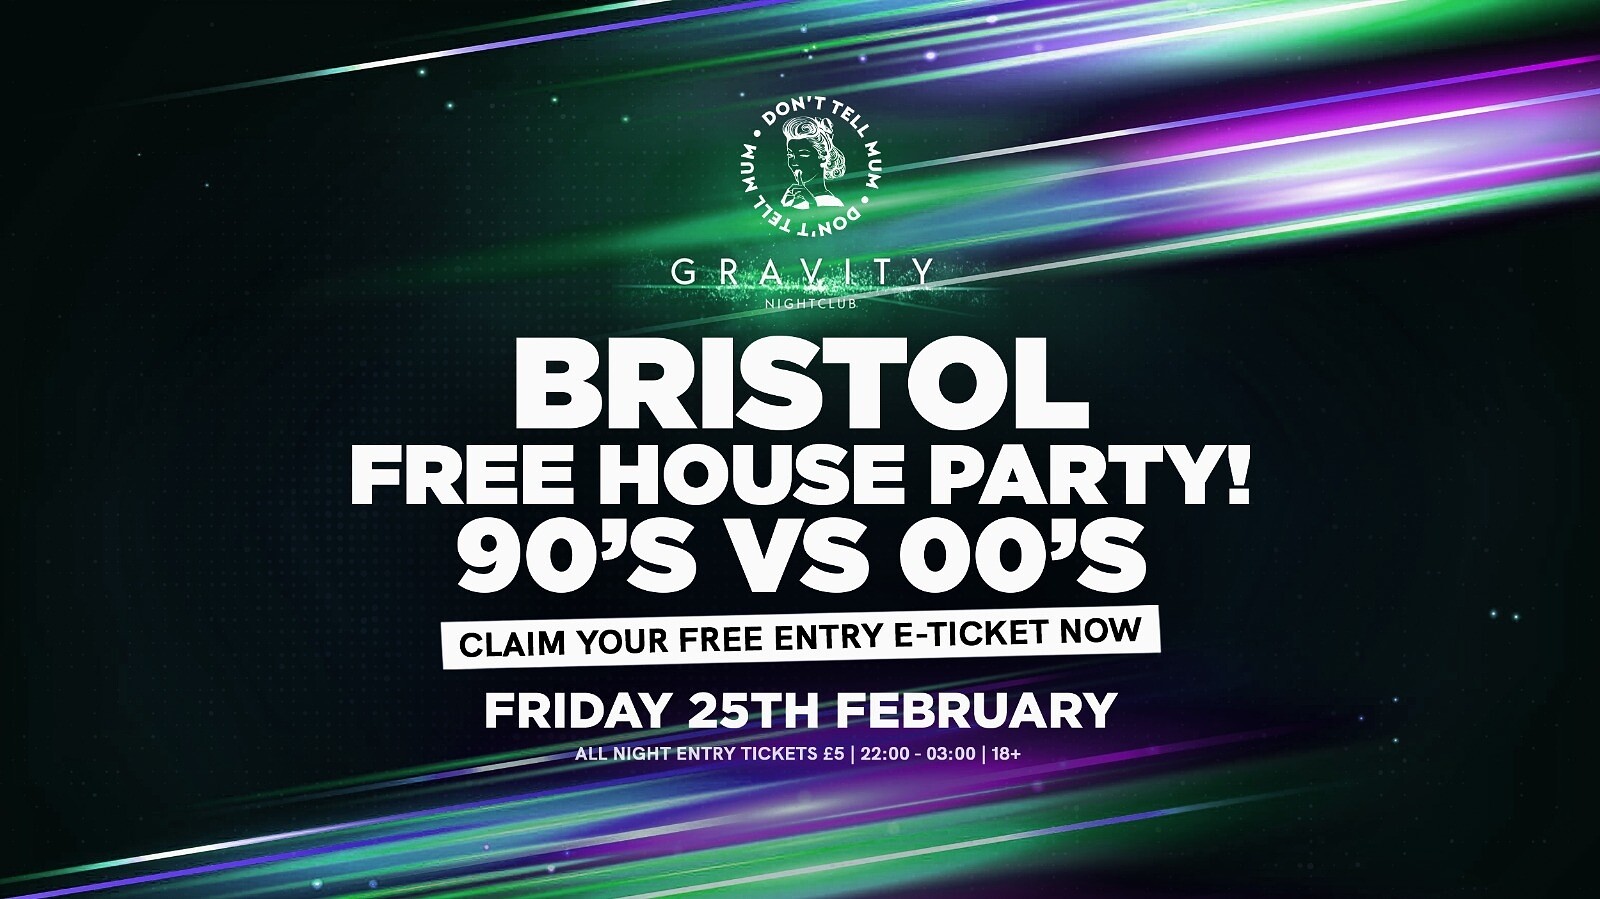 DTM Bristol • FREE 90's vs 00's House Party at Gravity Bristol